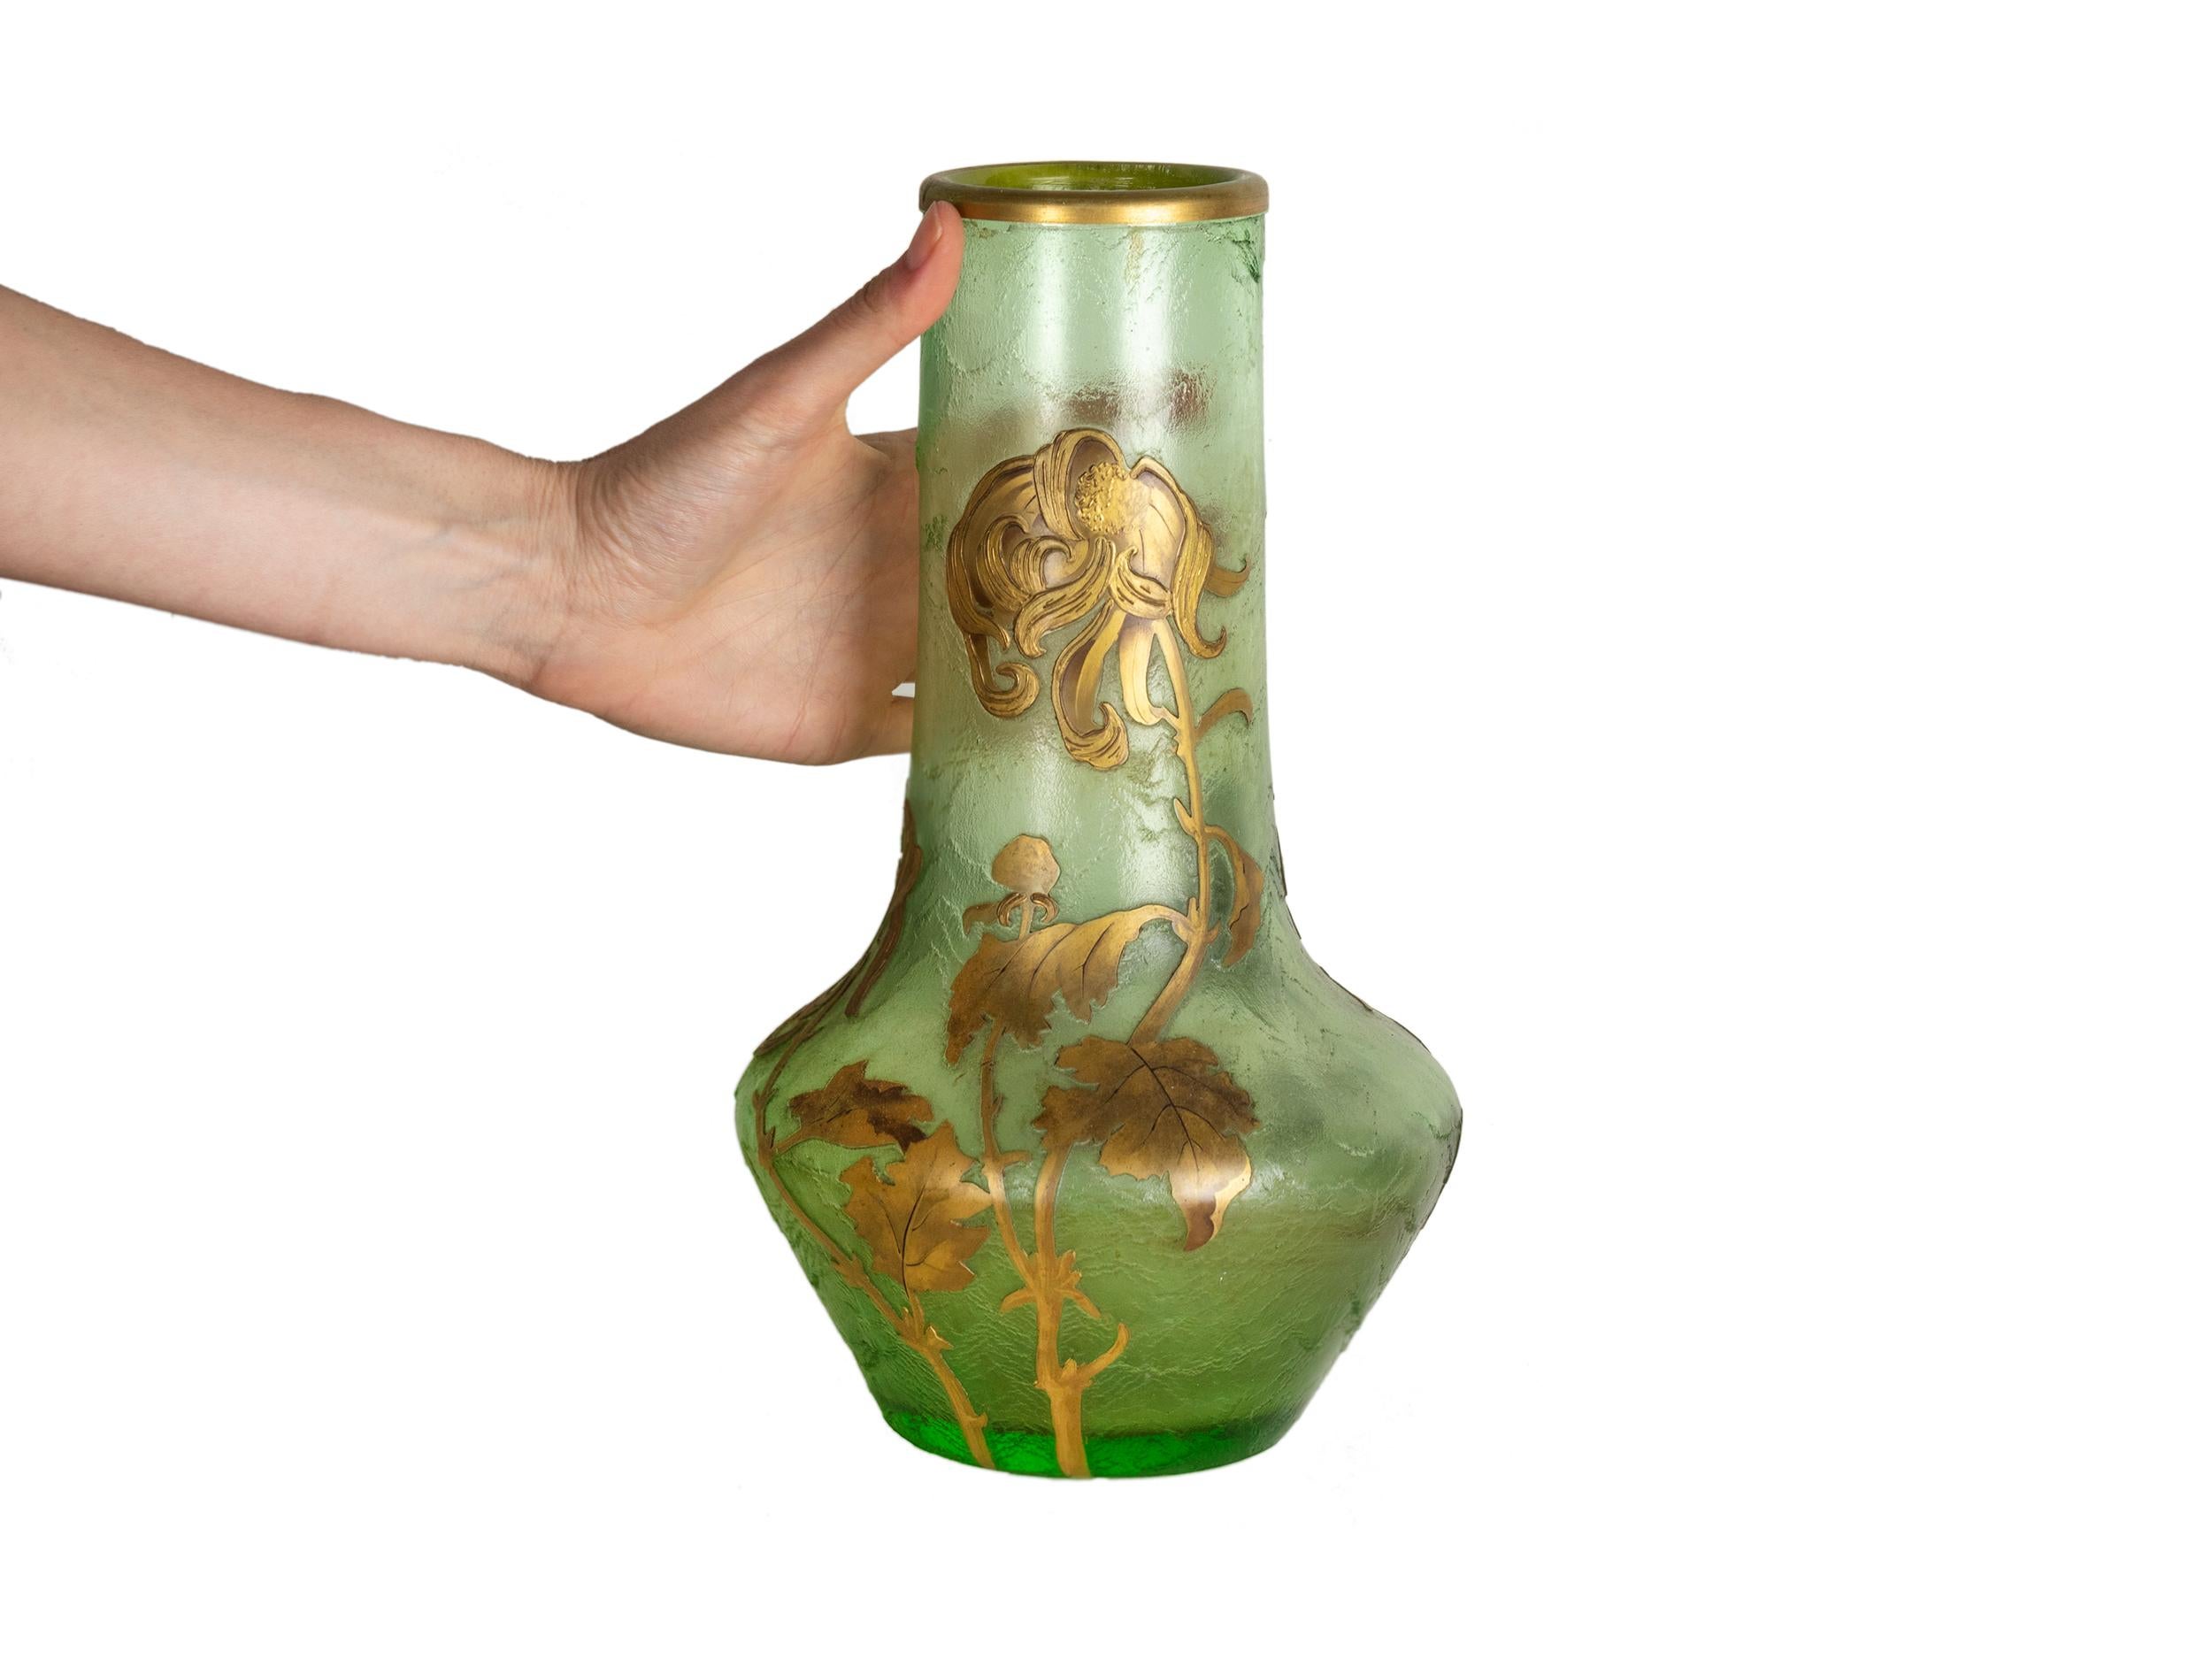 Montjoye, France, Large Art Nouveau Vase in Mouth-Blown Art Glass, 1880-1900 For Sale 1